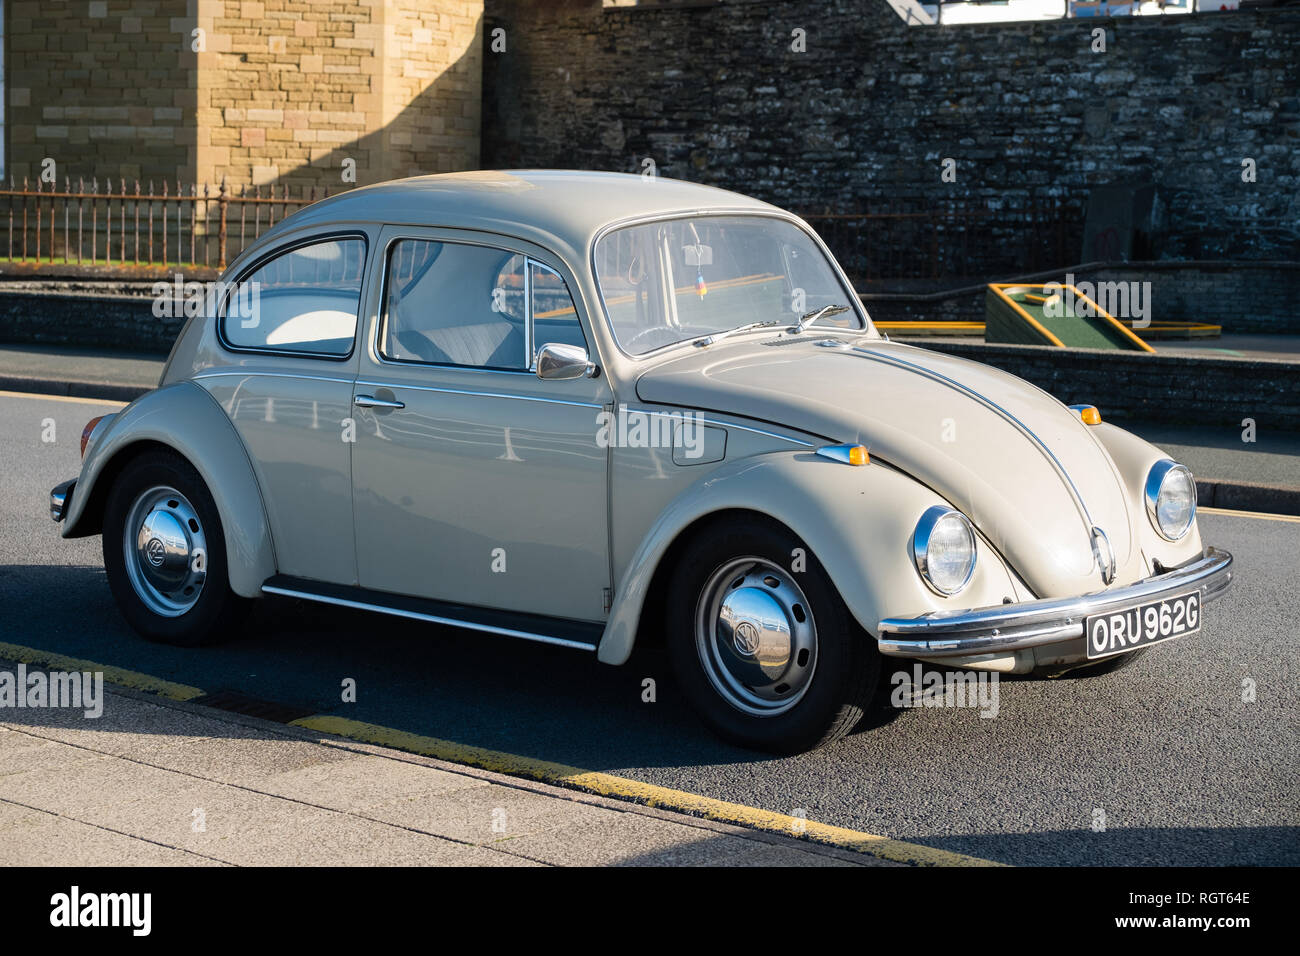 Classic car: A Volkswagen VW beetle 'bug' car Stock Photo